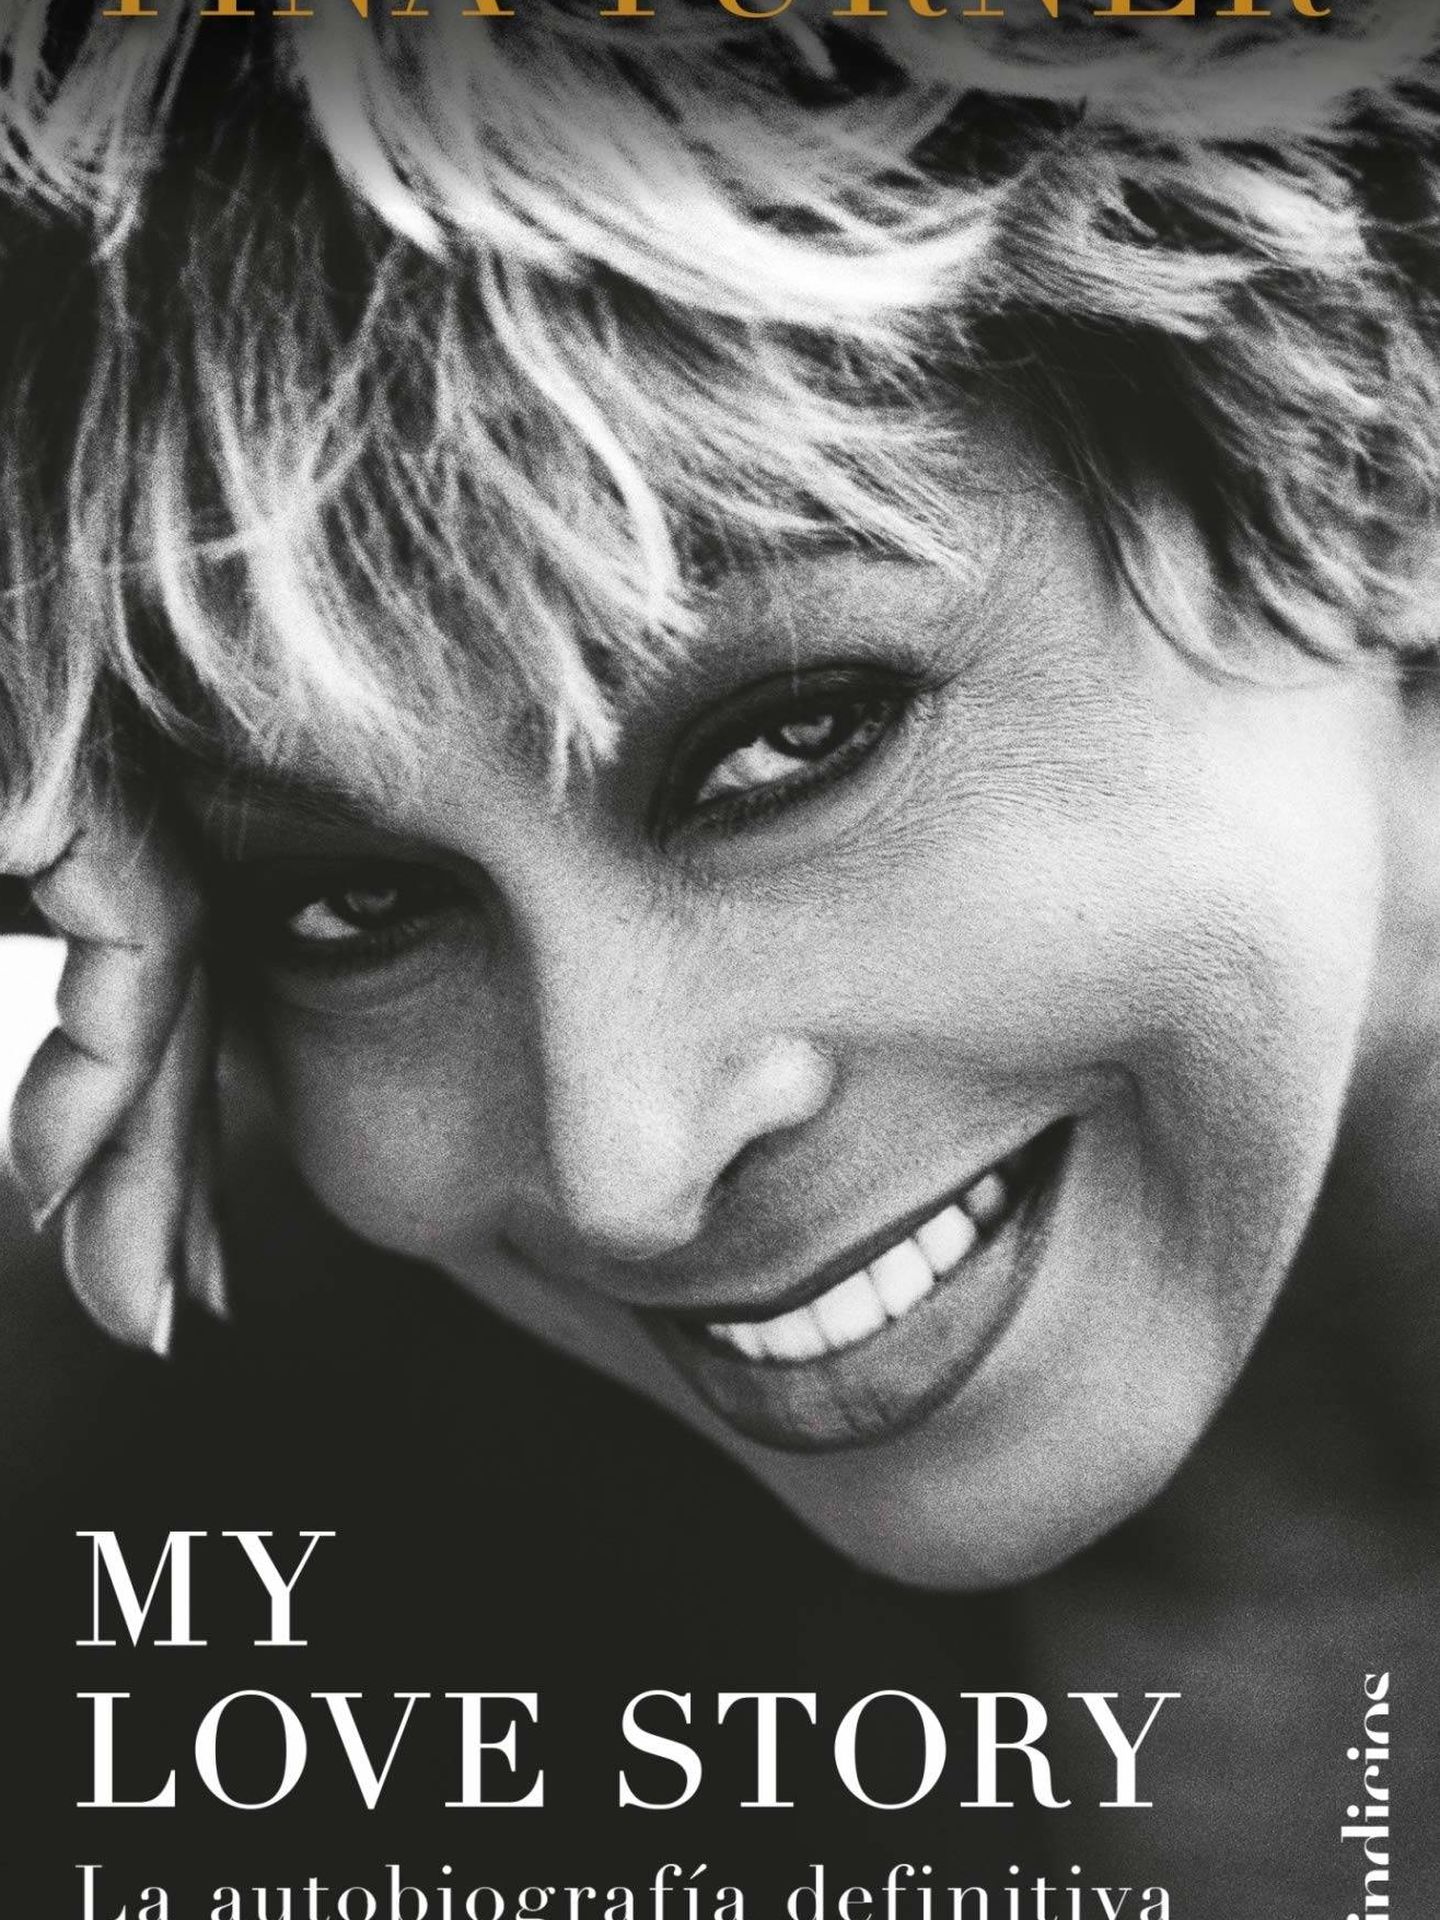 'Tina Turner, My love story' (Indicios)